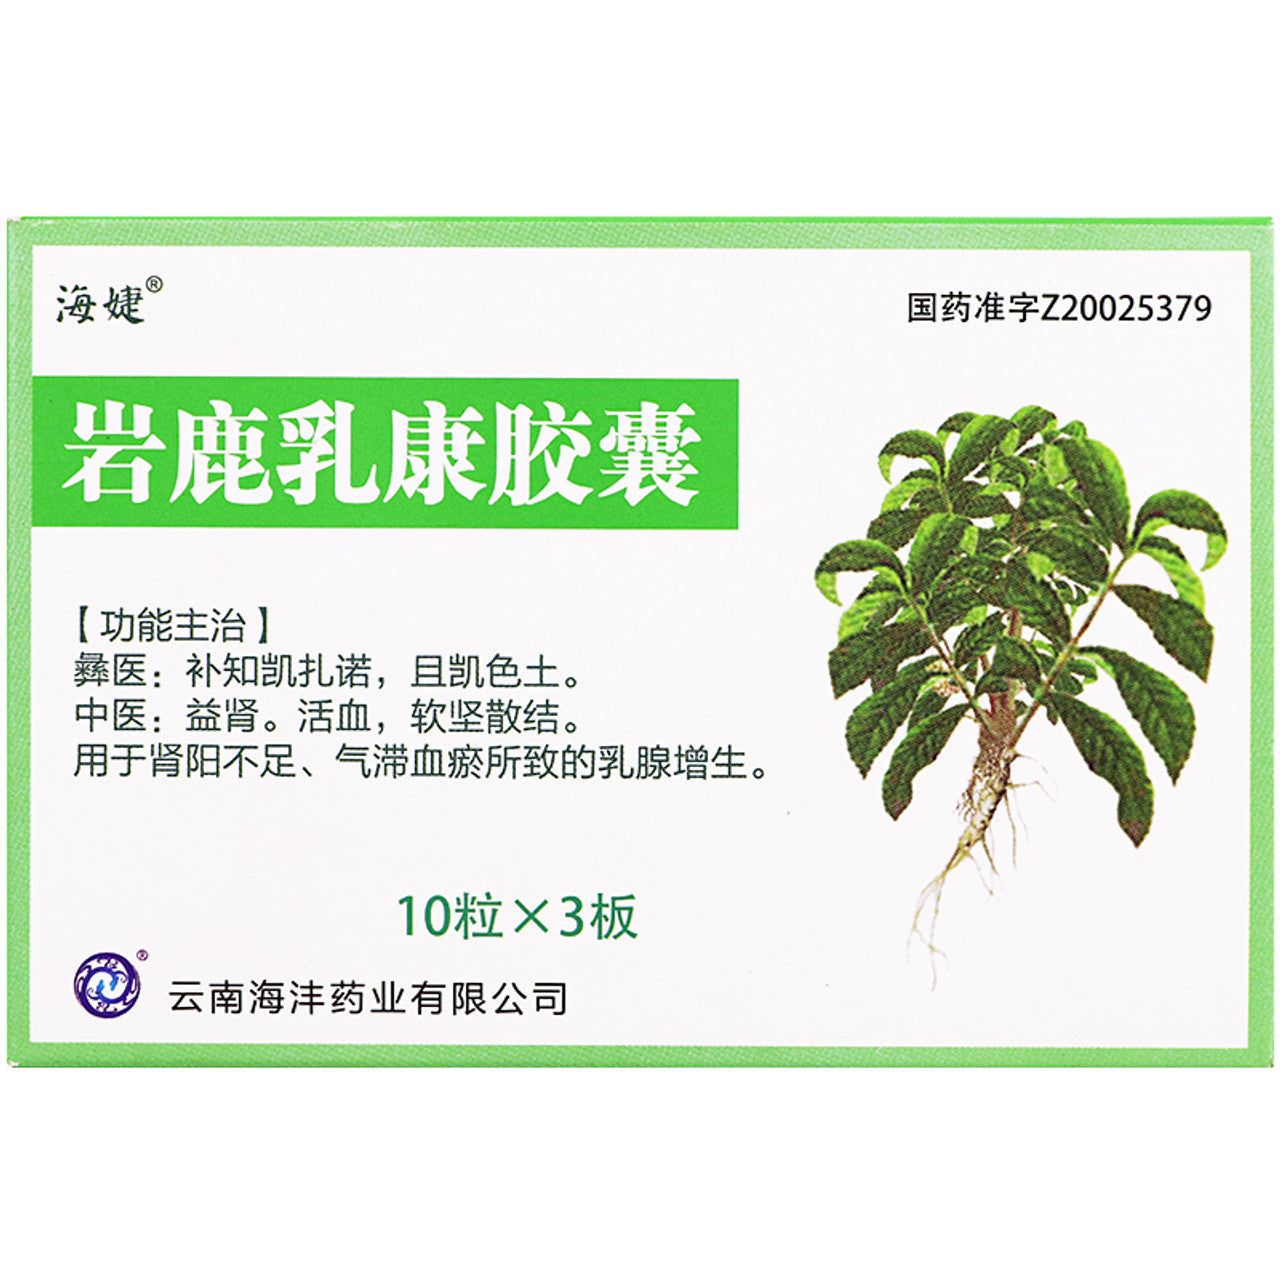 Herbal Medicine. Brand Haijie. Yanlu Rukang Jiaonang or Yan Lu Ru Kang Jiao Nang or Yanlu Rukang Capsules or Yan Lu Ru Kang Capsules for Breast Disease